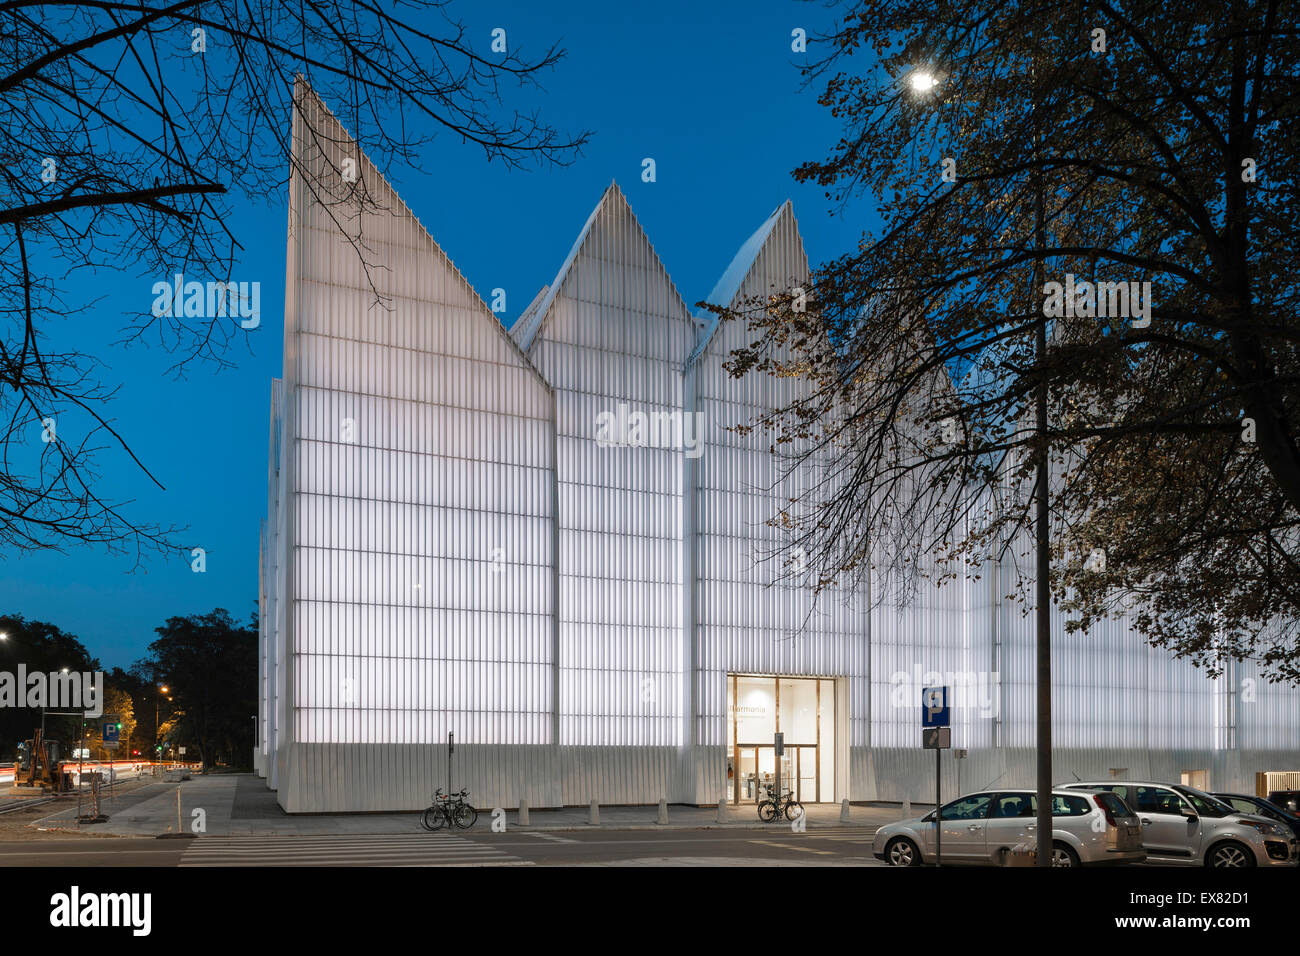 Corner elevation at night. Szczecin Philharmonic Hall, Szczecin, Poland. Architect: Estudio Barozzi Veiga, 2014. Stock Photo